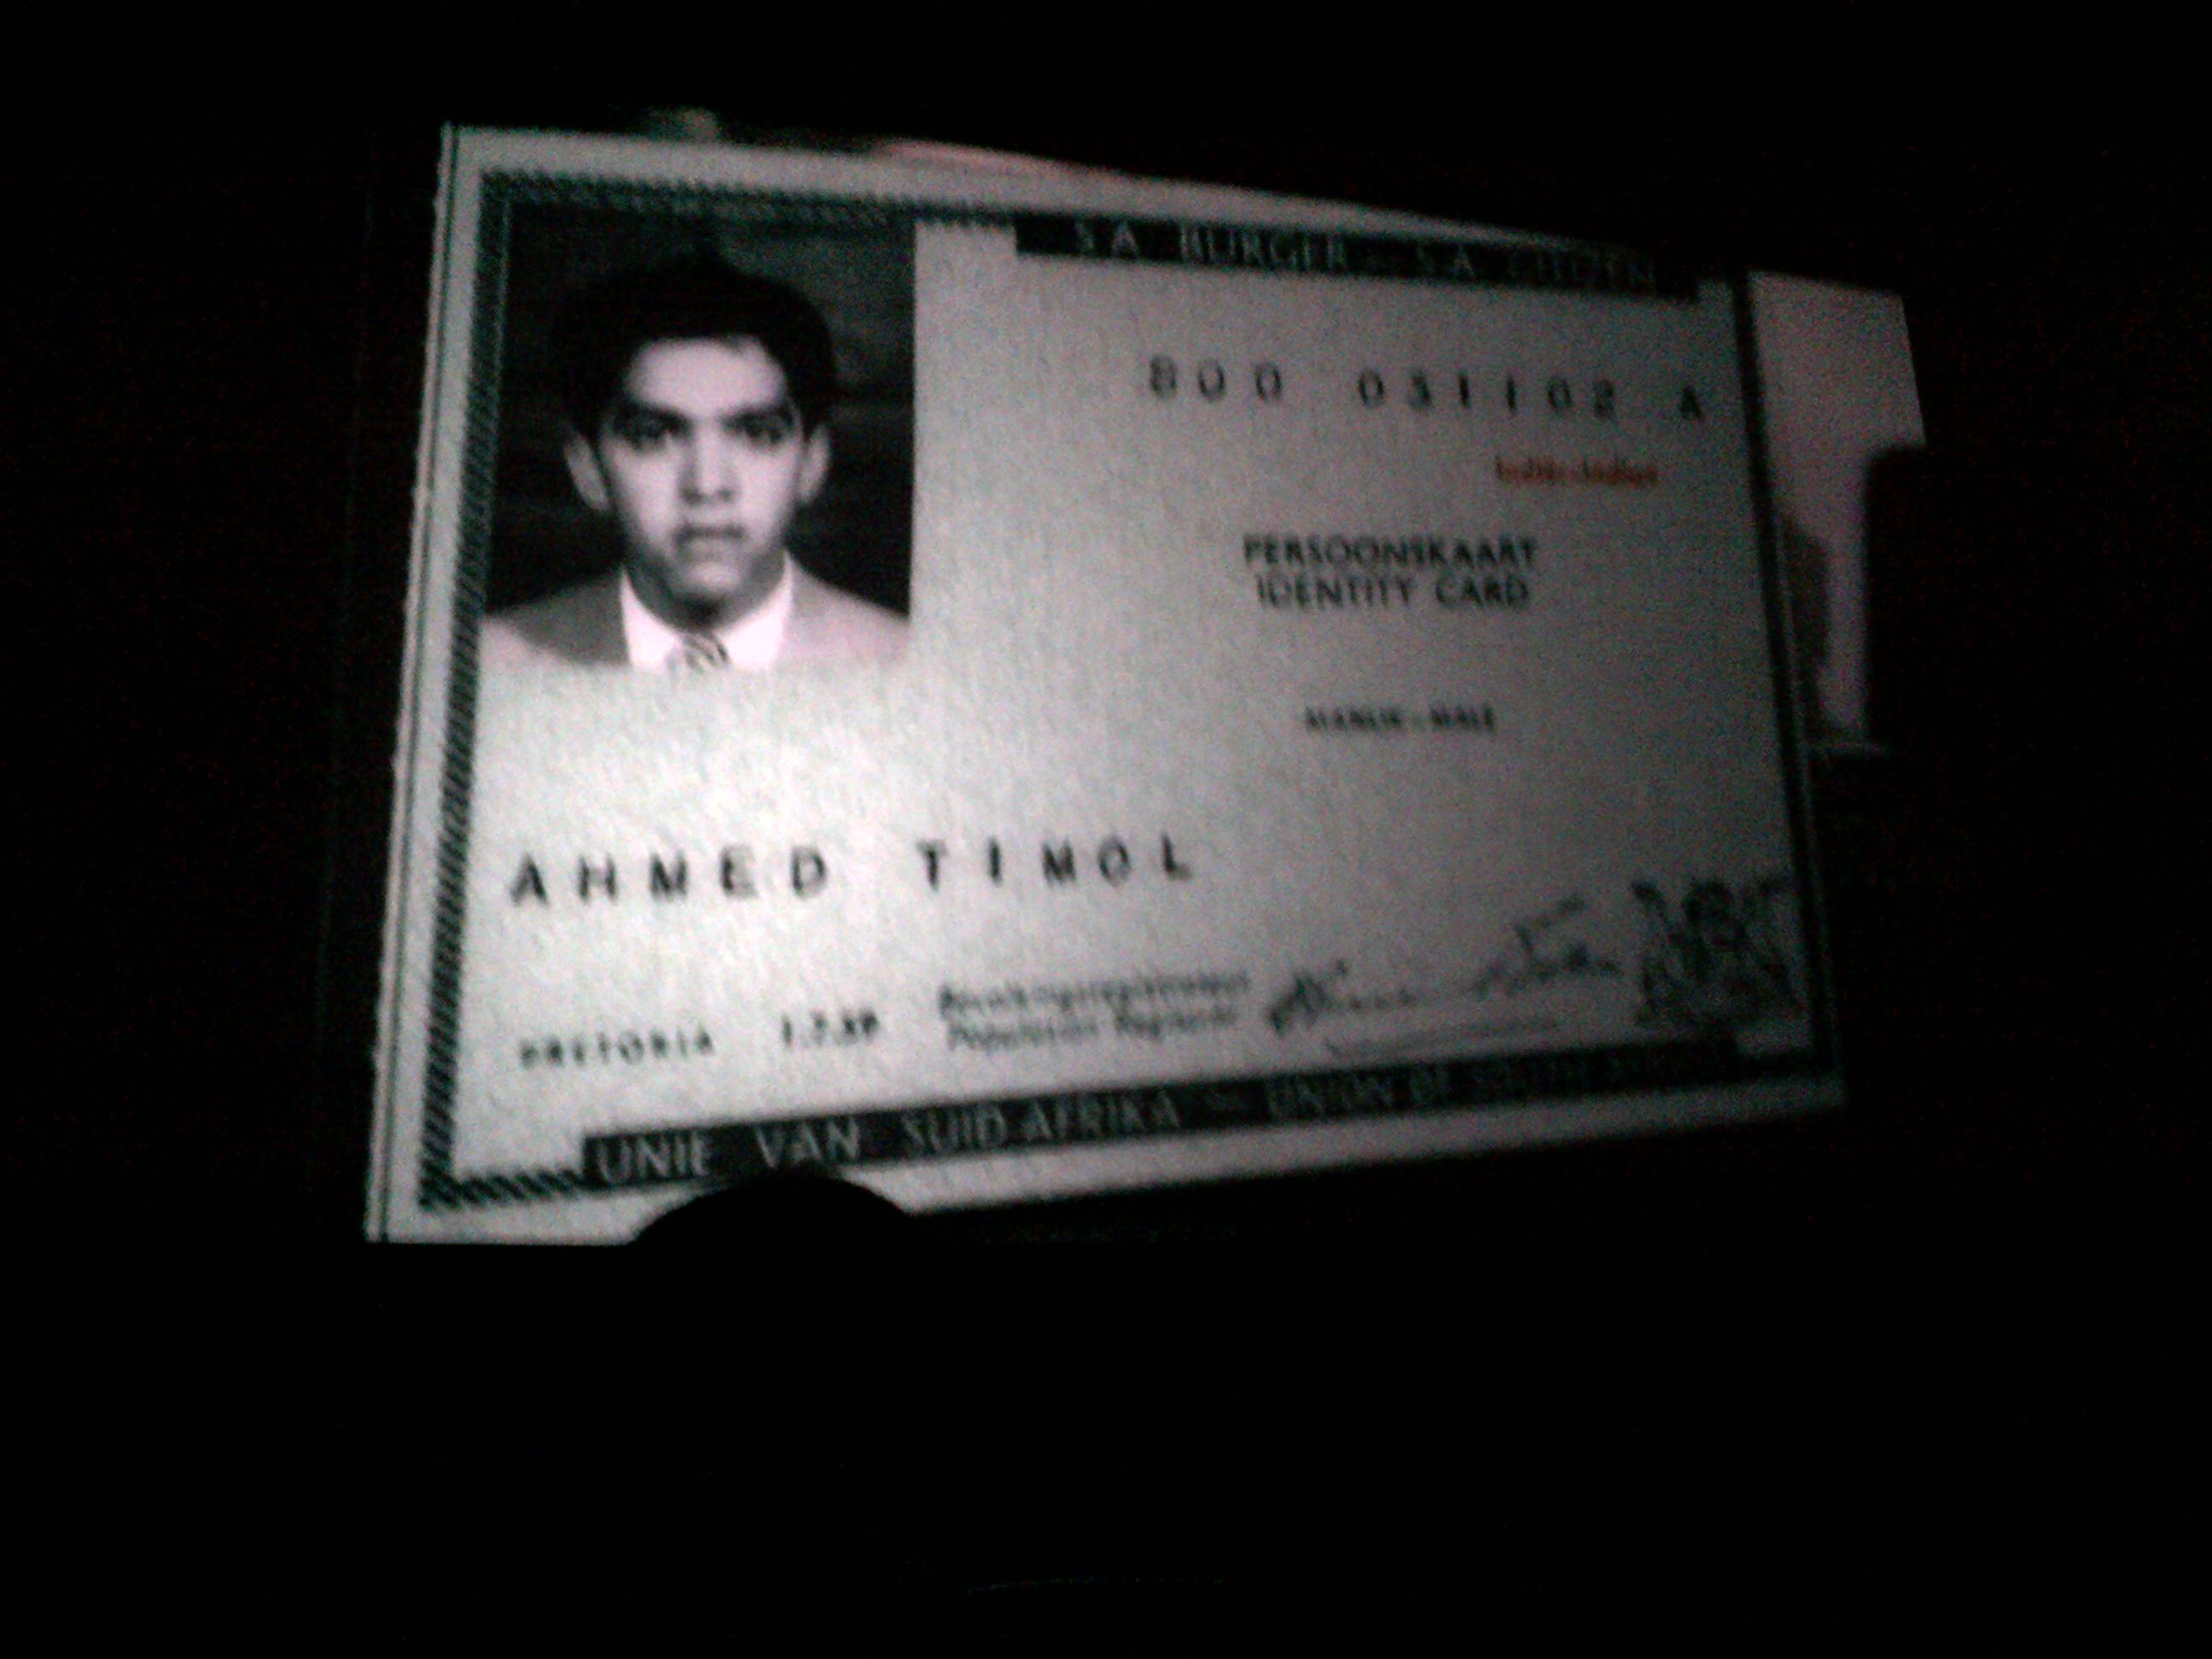 Ahmed Timol's ID document